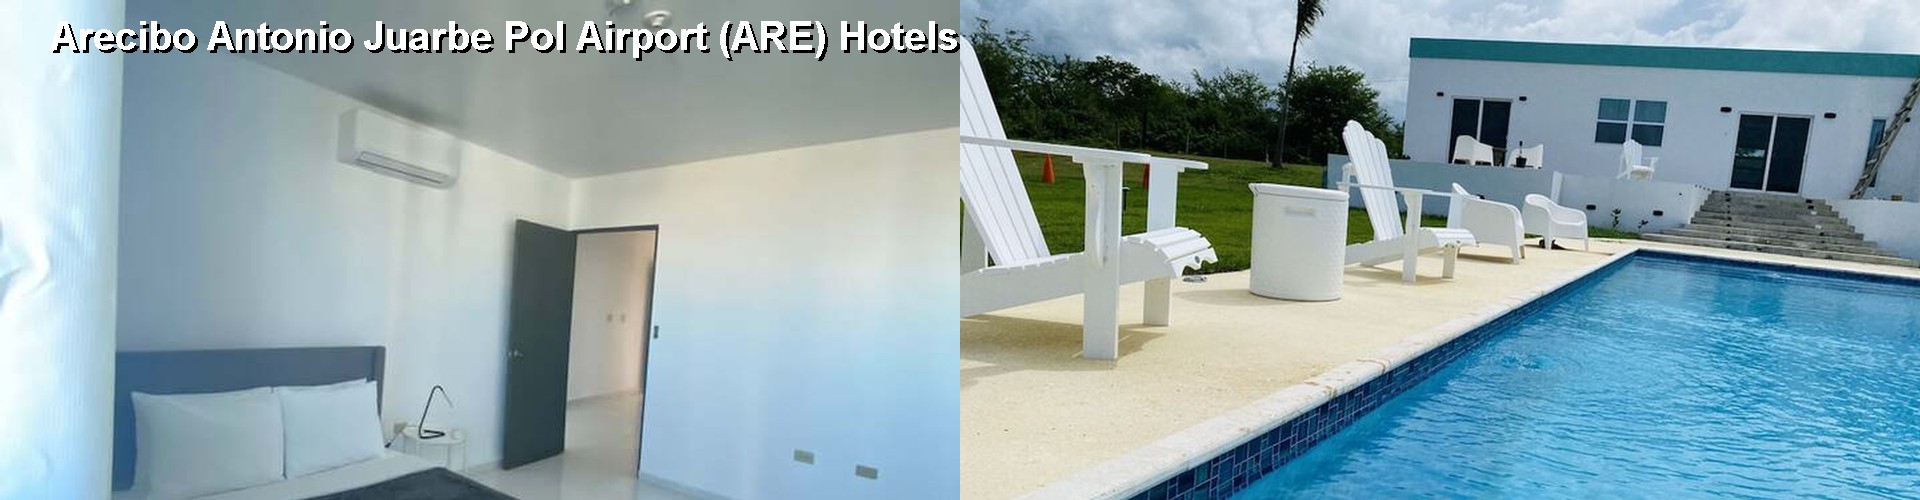 5 Best Hotels near Arecibo Antonio Juarbe Pol Airport (ARE)